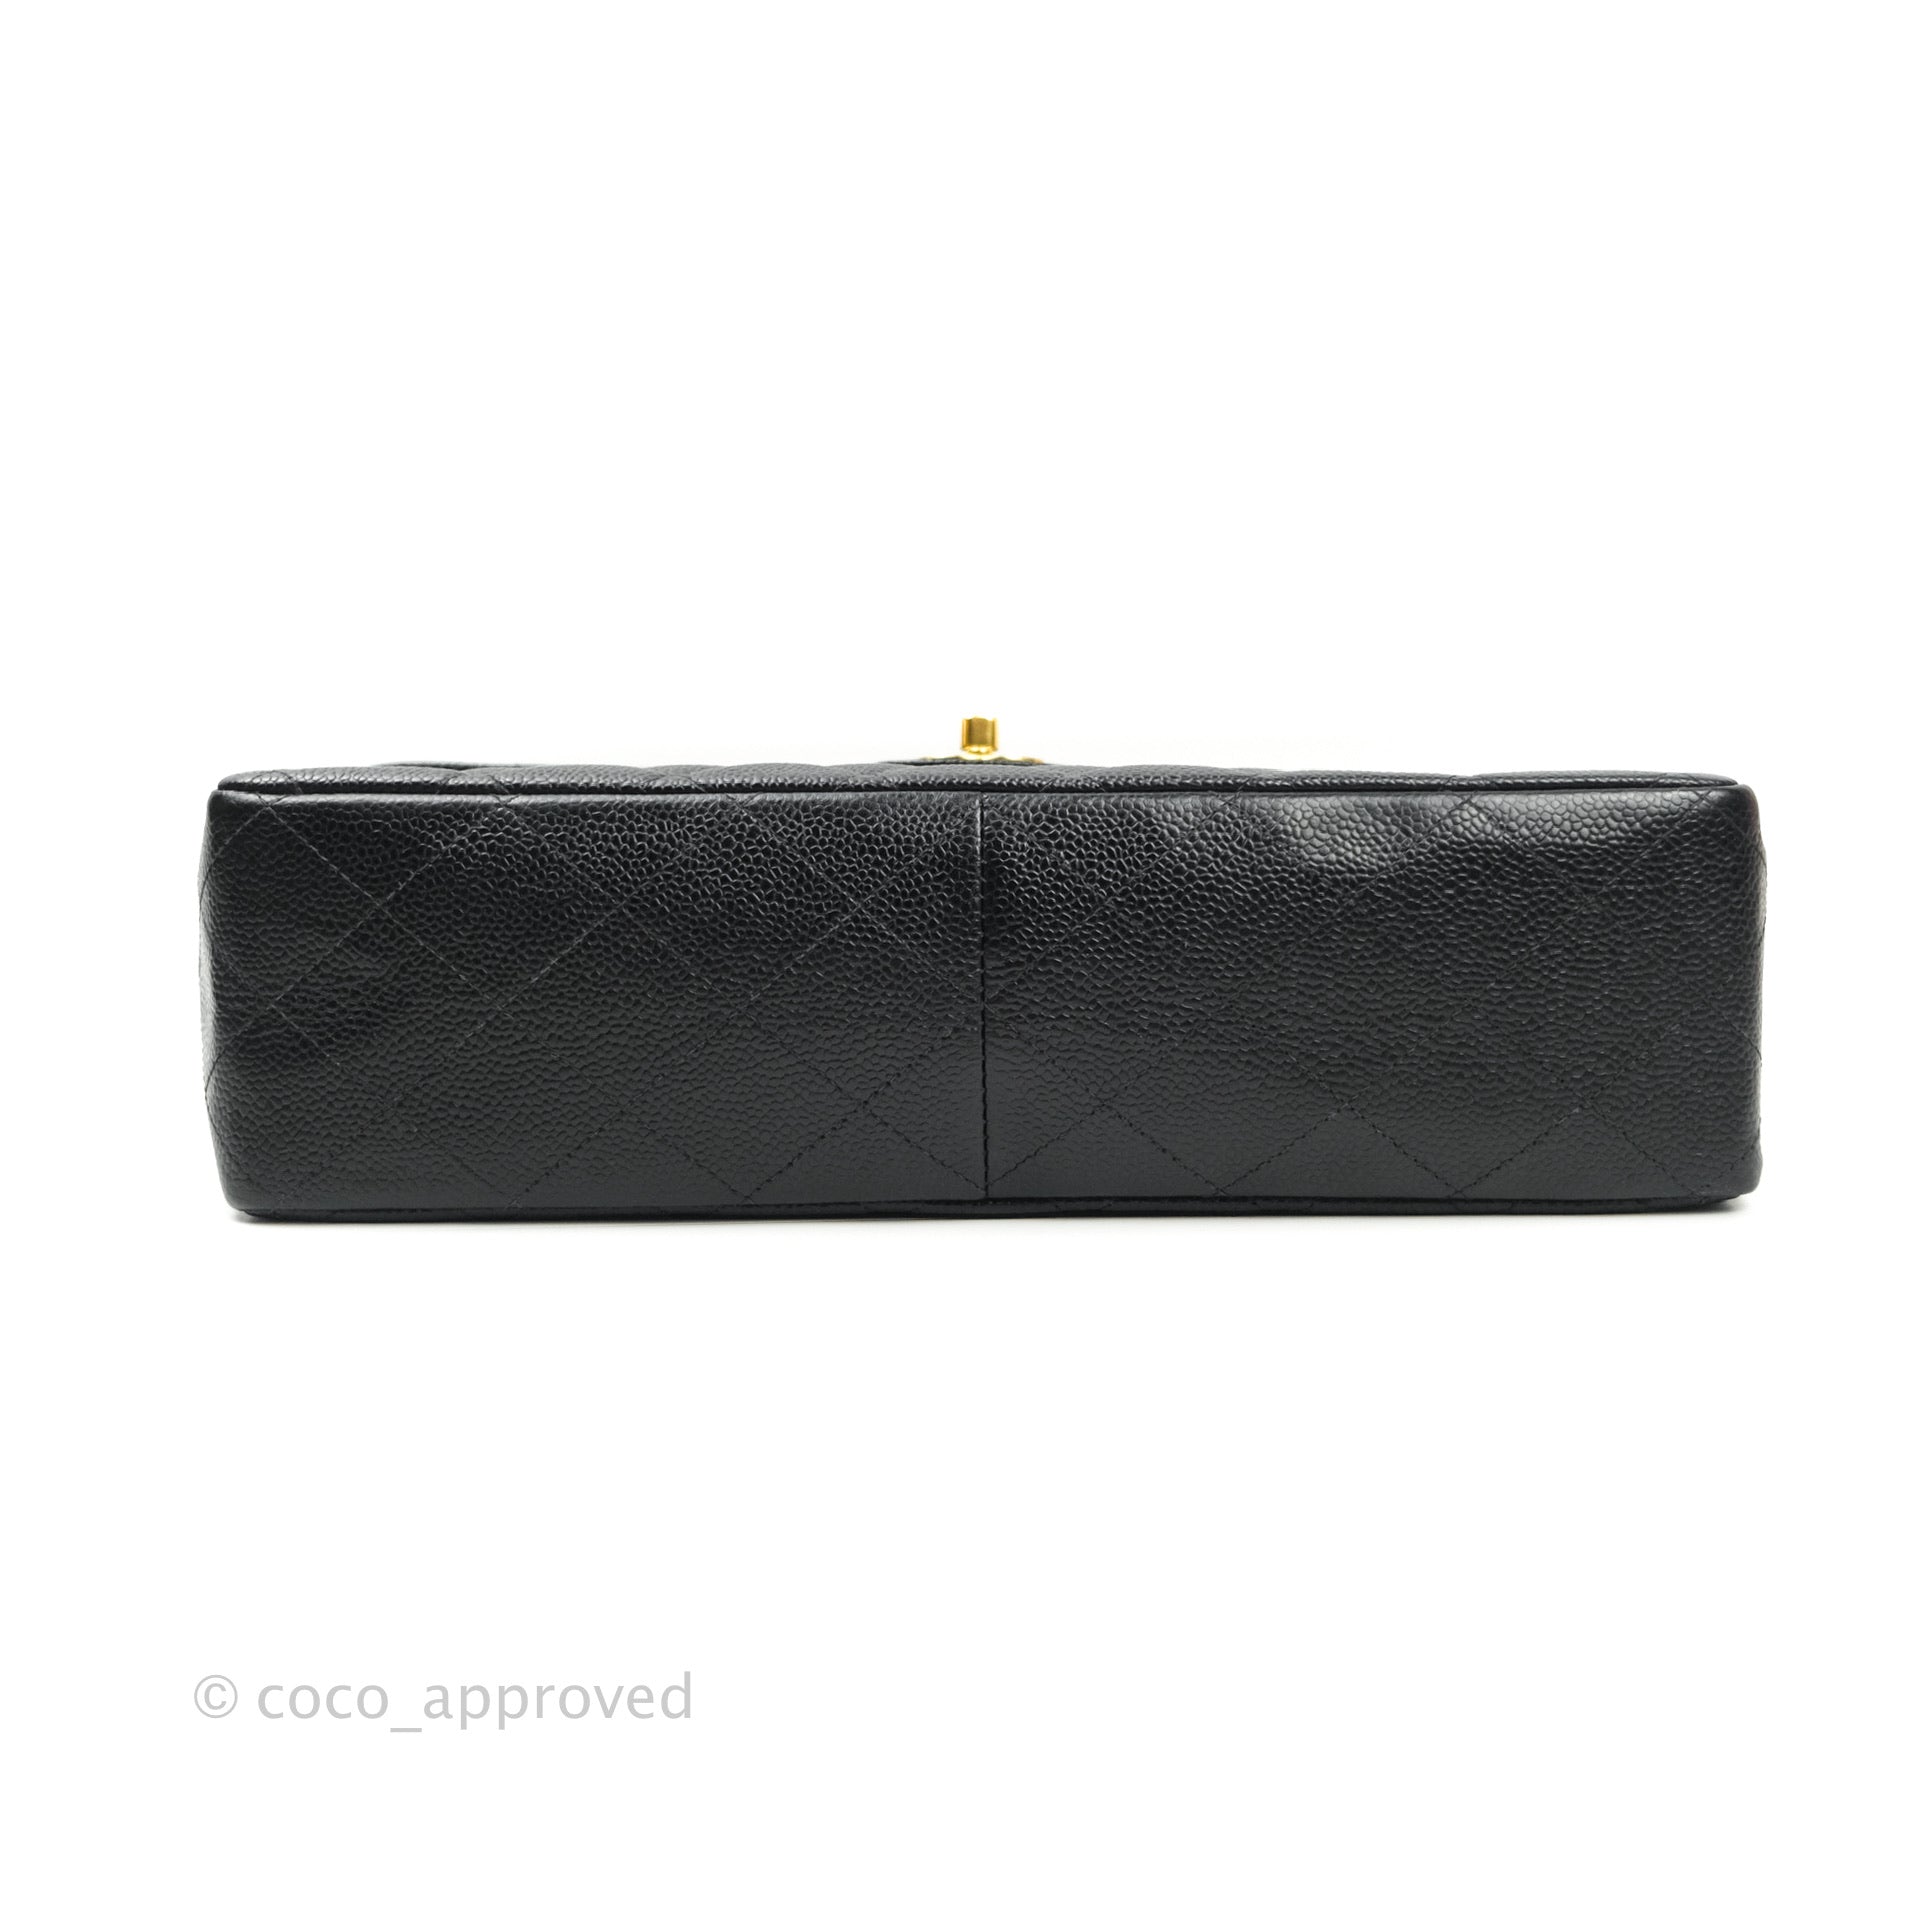 CHANEL BLACK CAVIAR SHW Jumbo Classic Single Flap Bag; Original Box + Card  $5,399.00 - PicClick